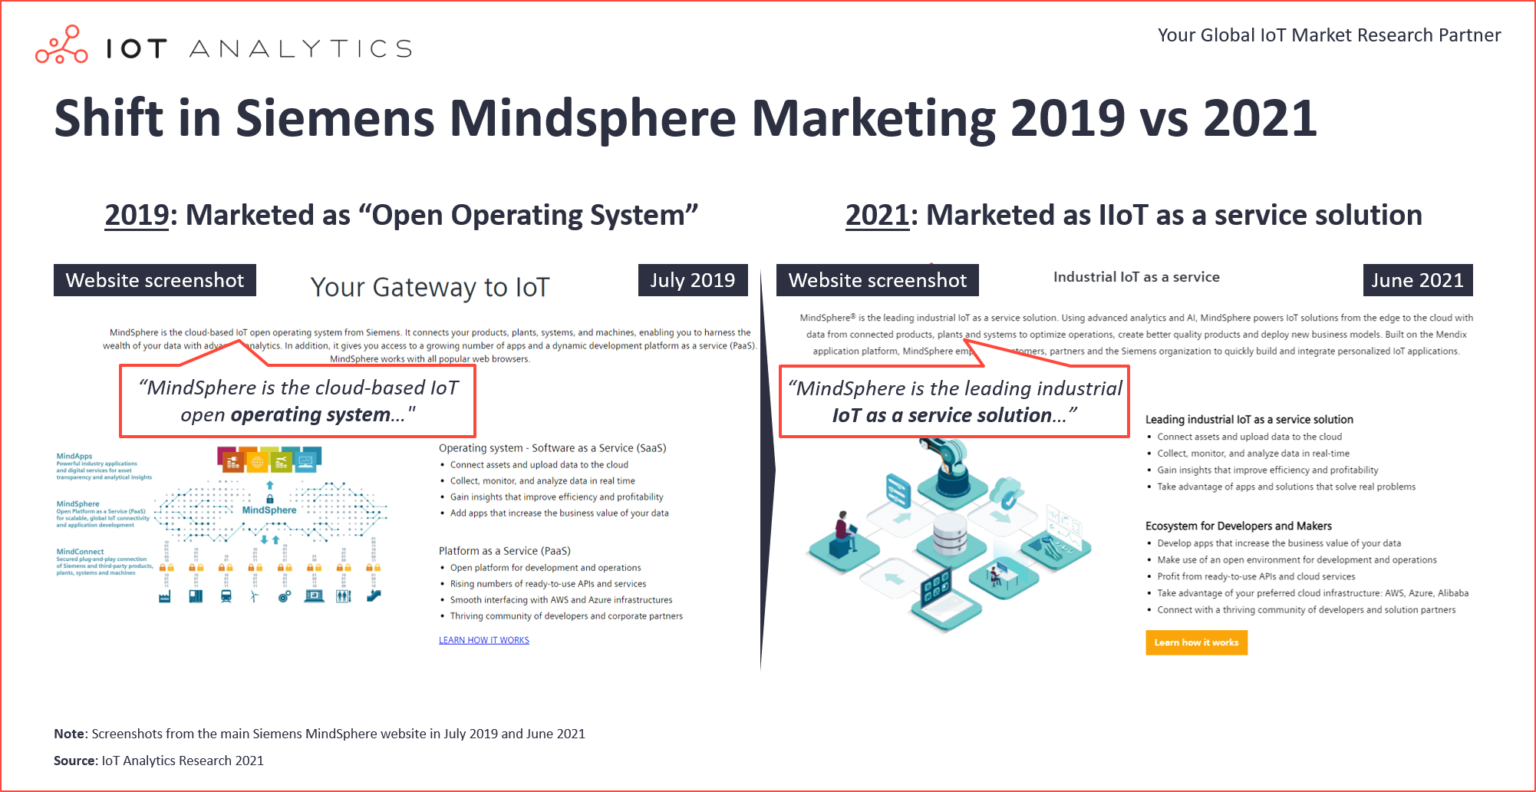 Shift-in-Siemens-MIndsphere-Marketing-2019-vs-2021-v2-1536x792.png (473 KB)